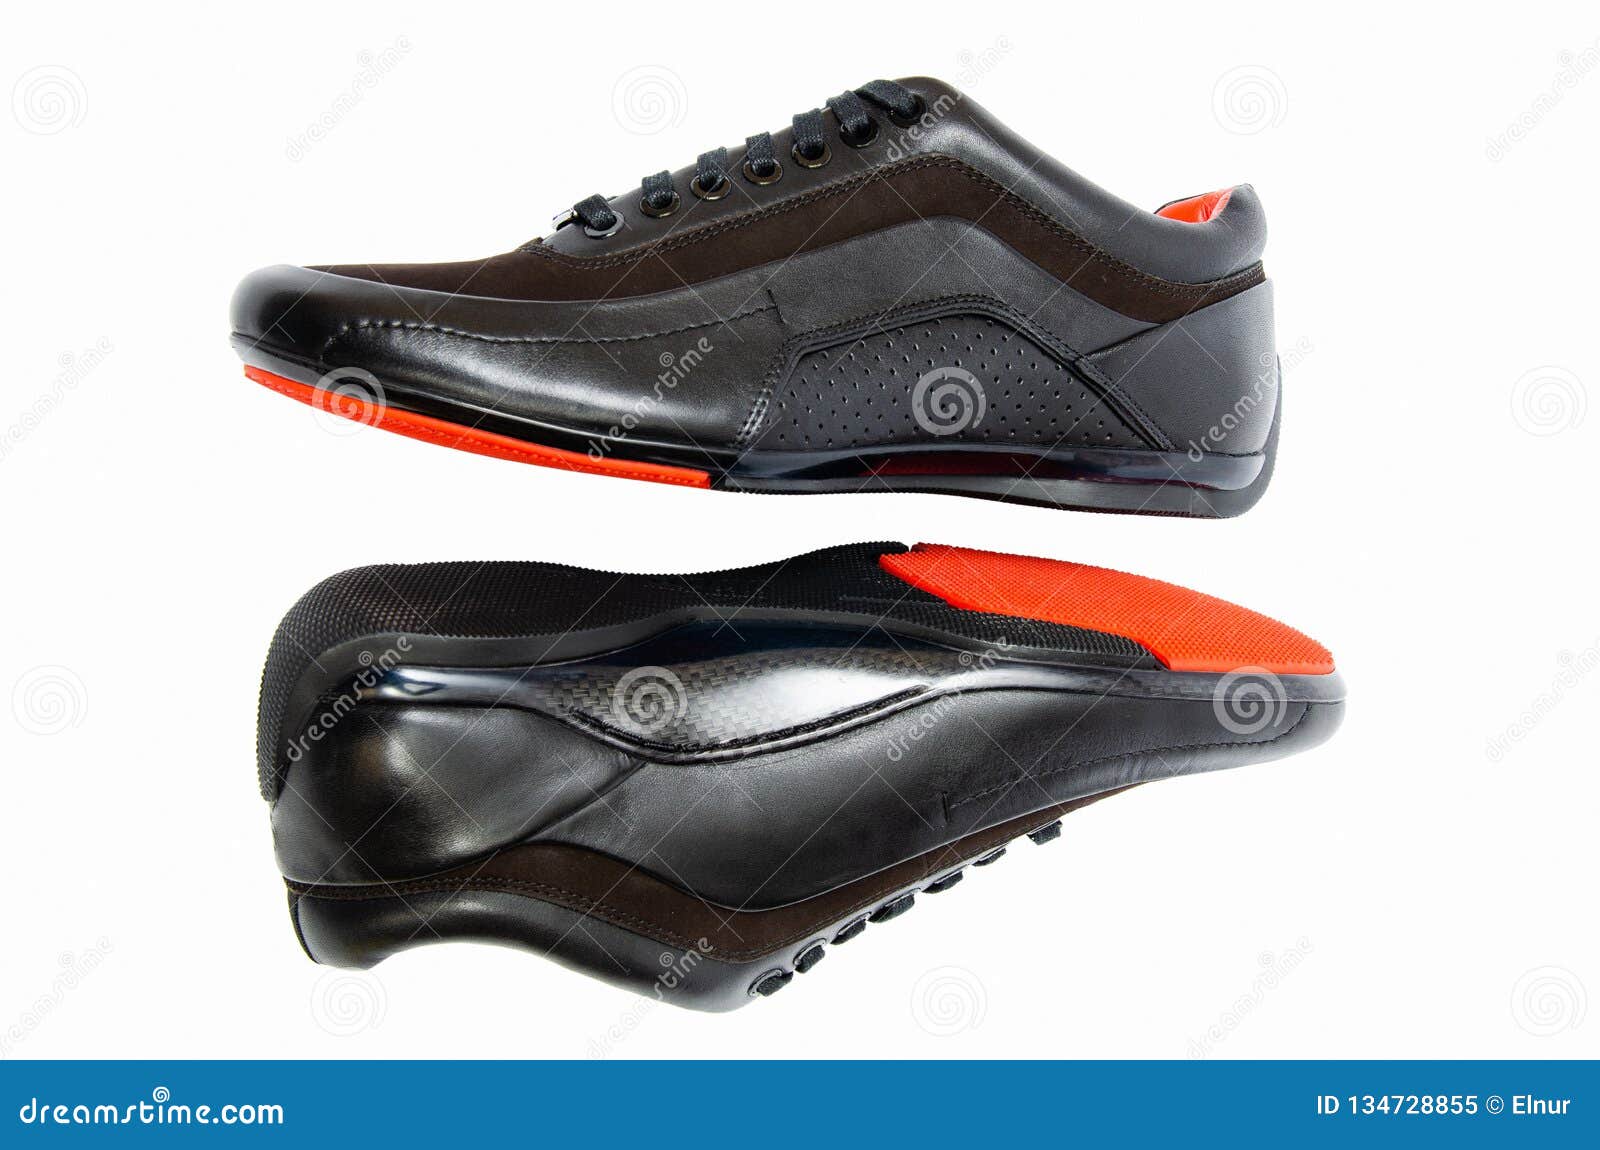 The Black Sporty Shoes Isolated on White Background Stock Image - Image ...